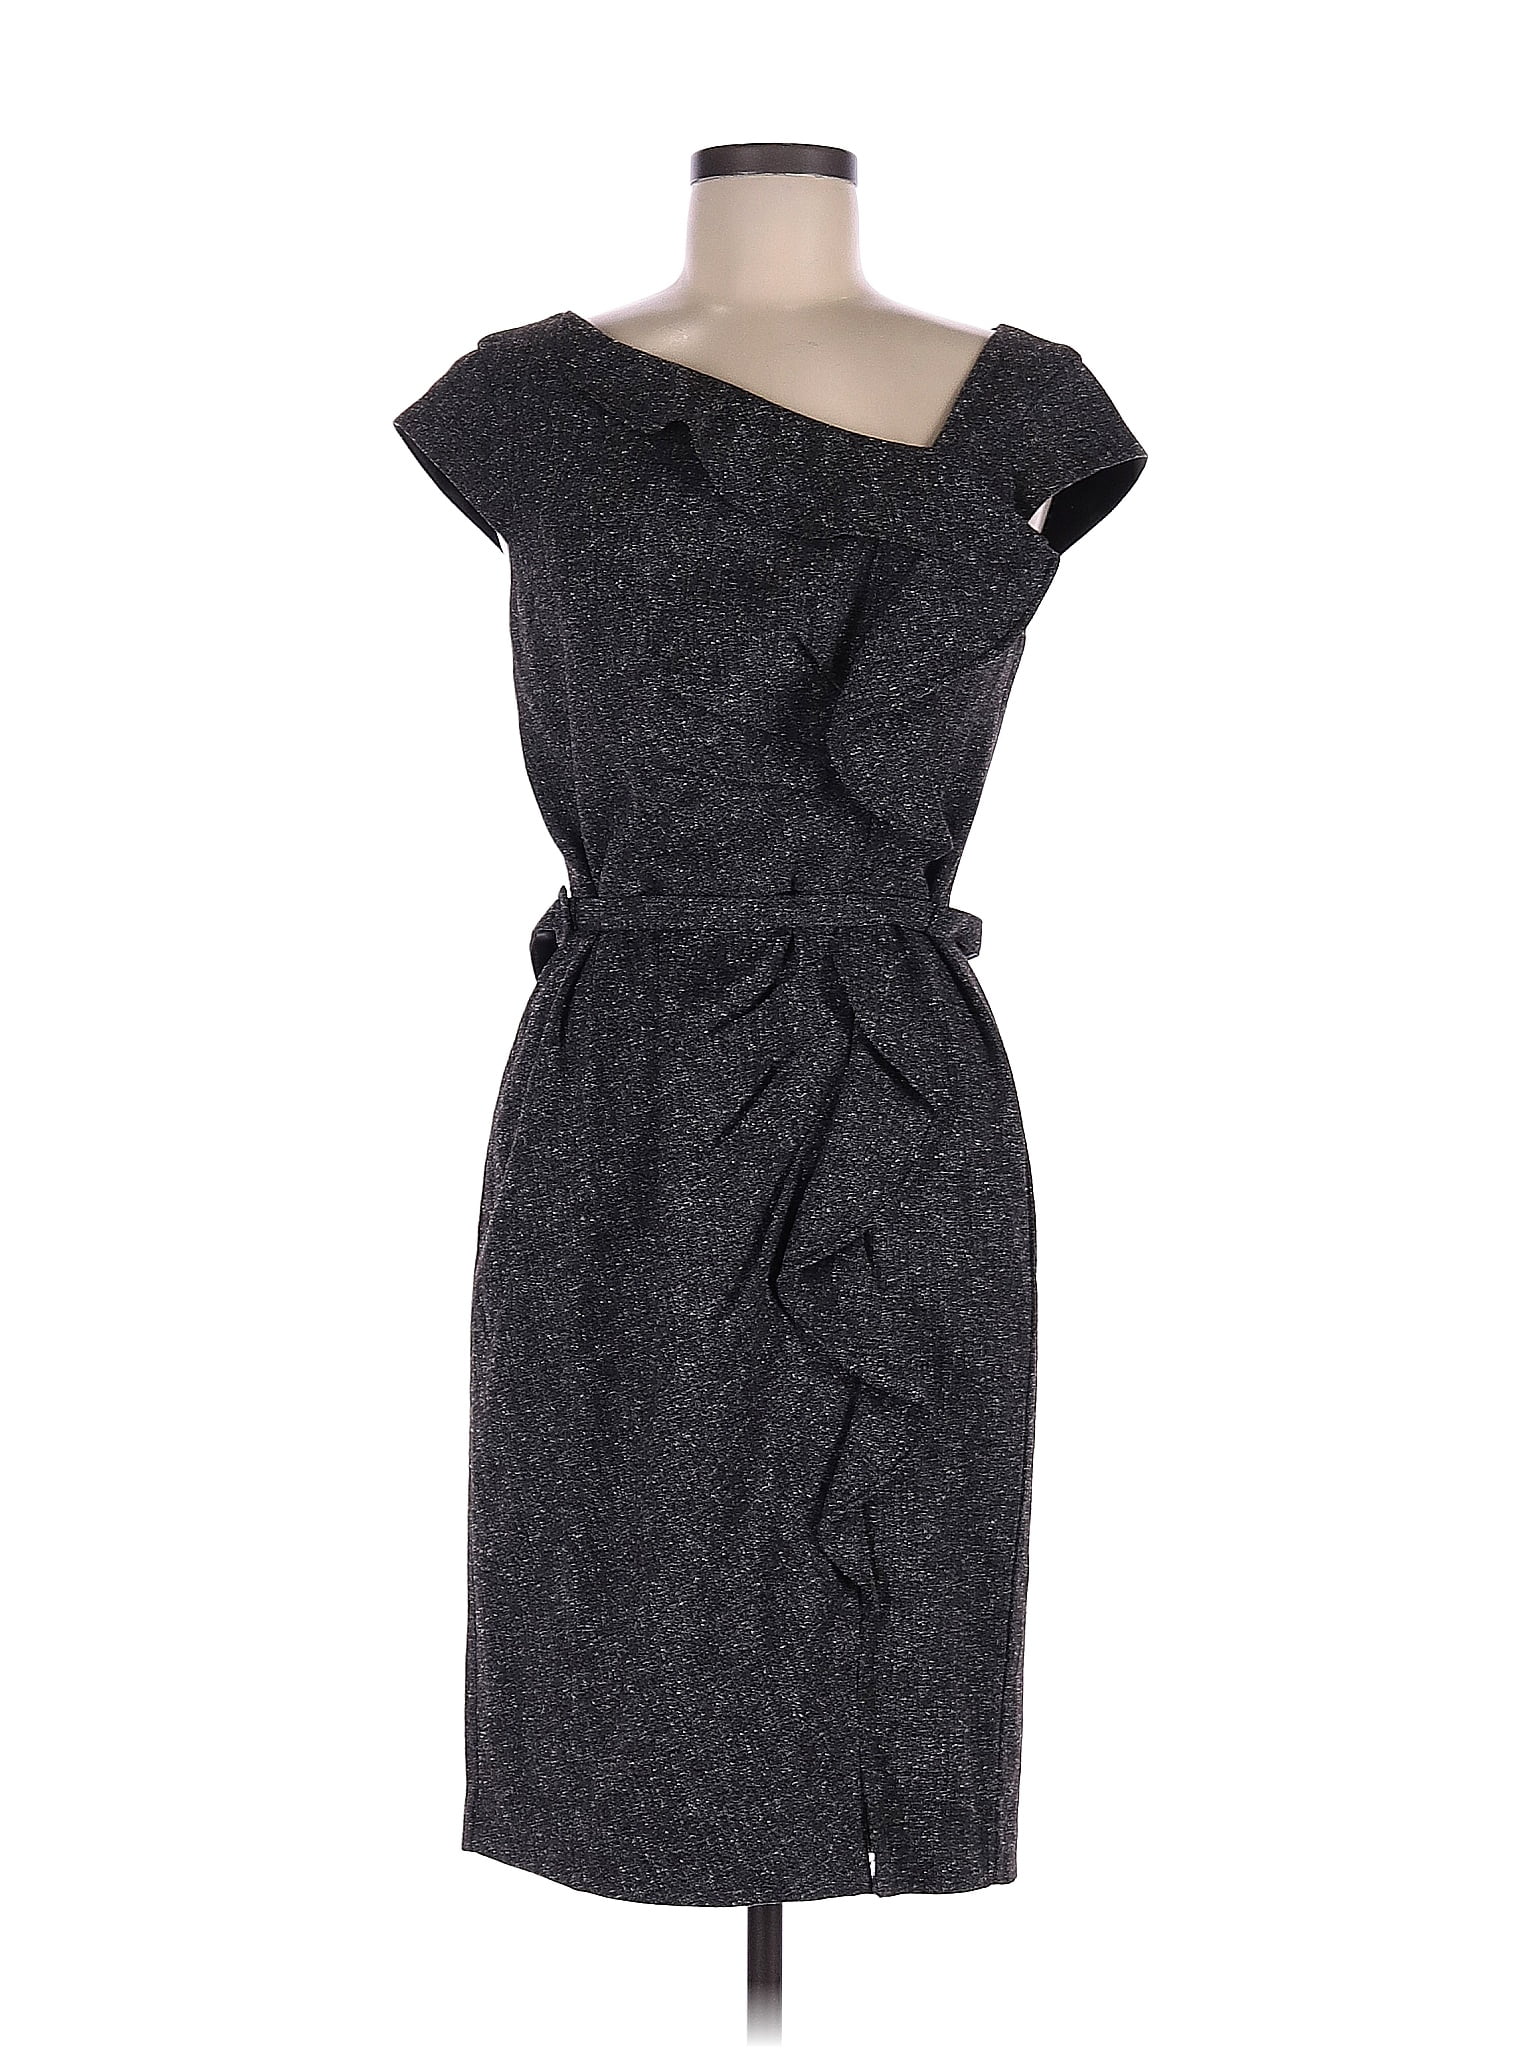 White House Black Market Black Casual Dress Size 6 - 74% off | thredUP